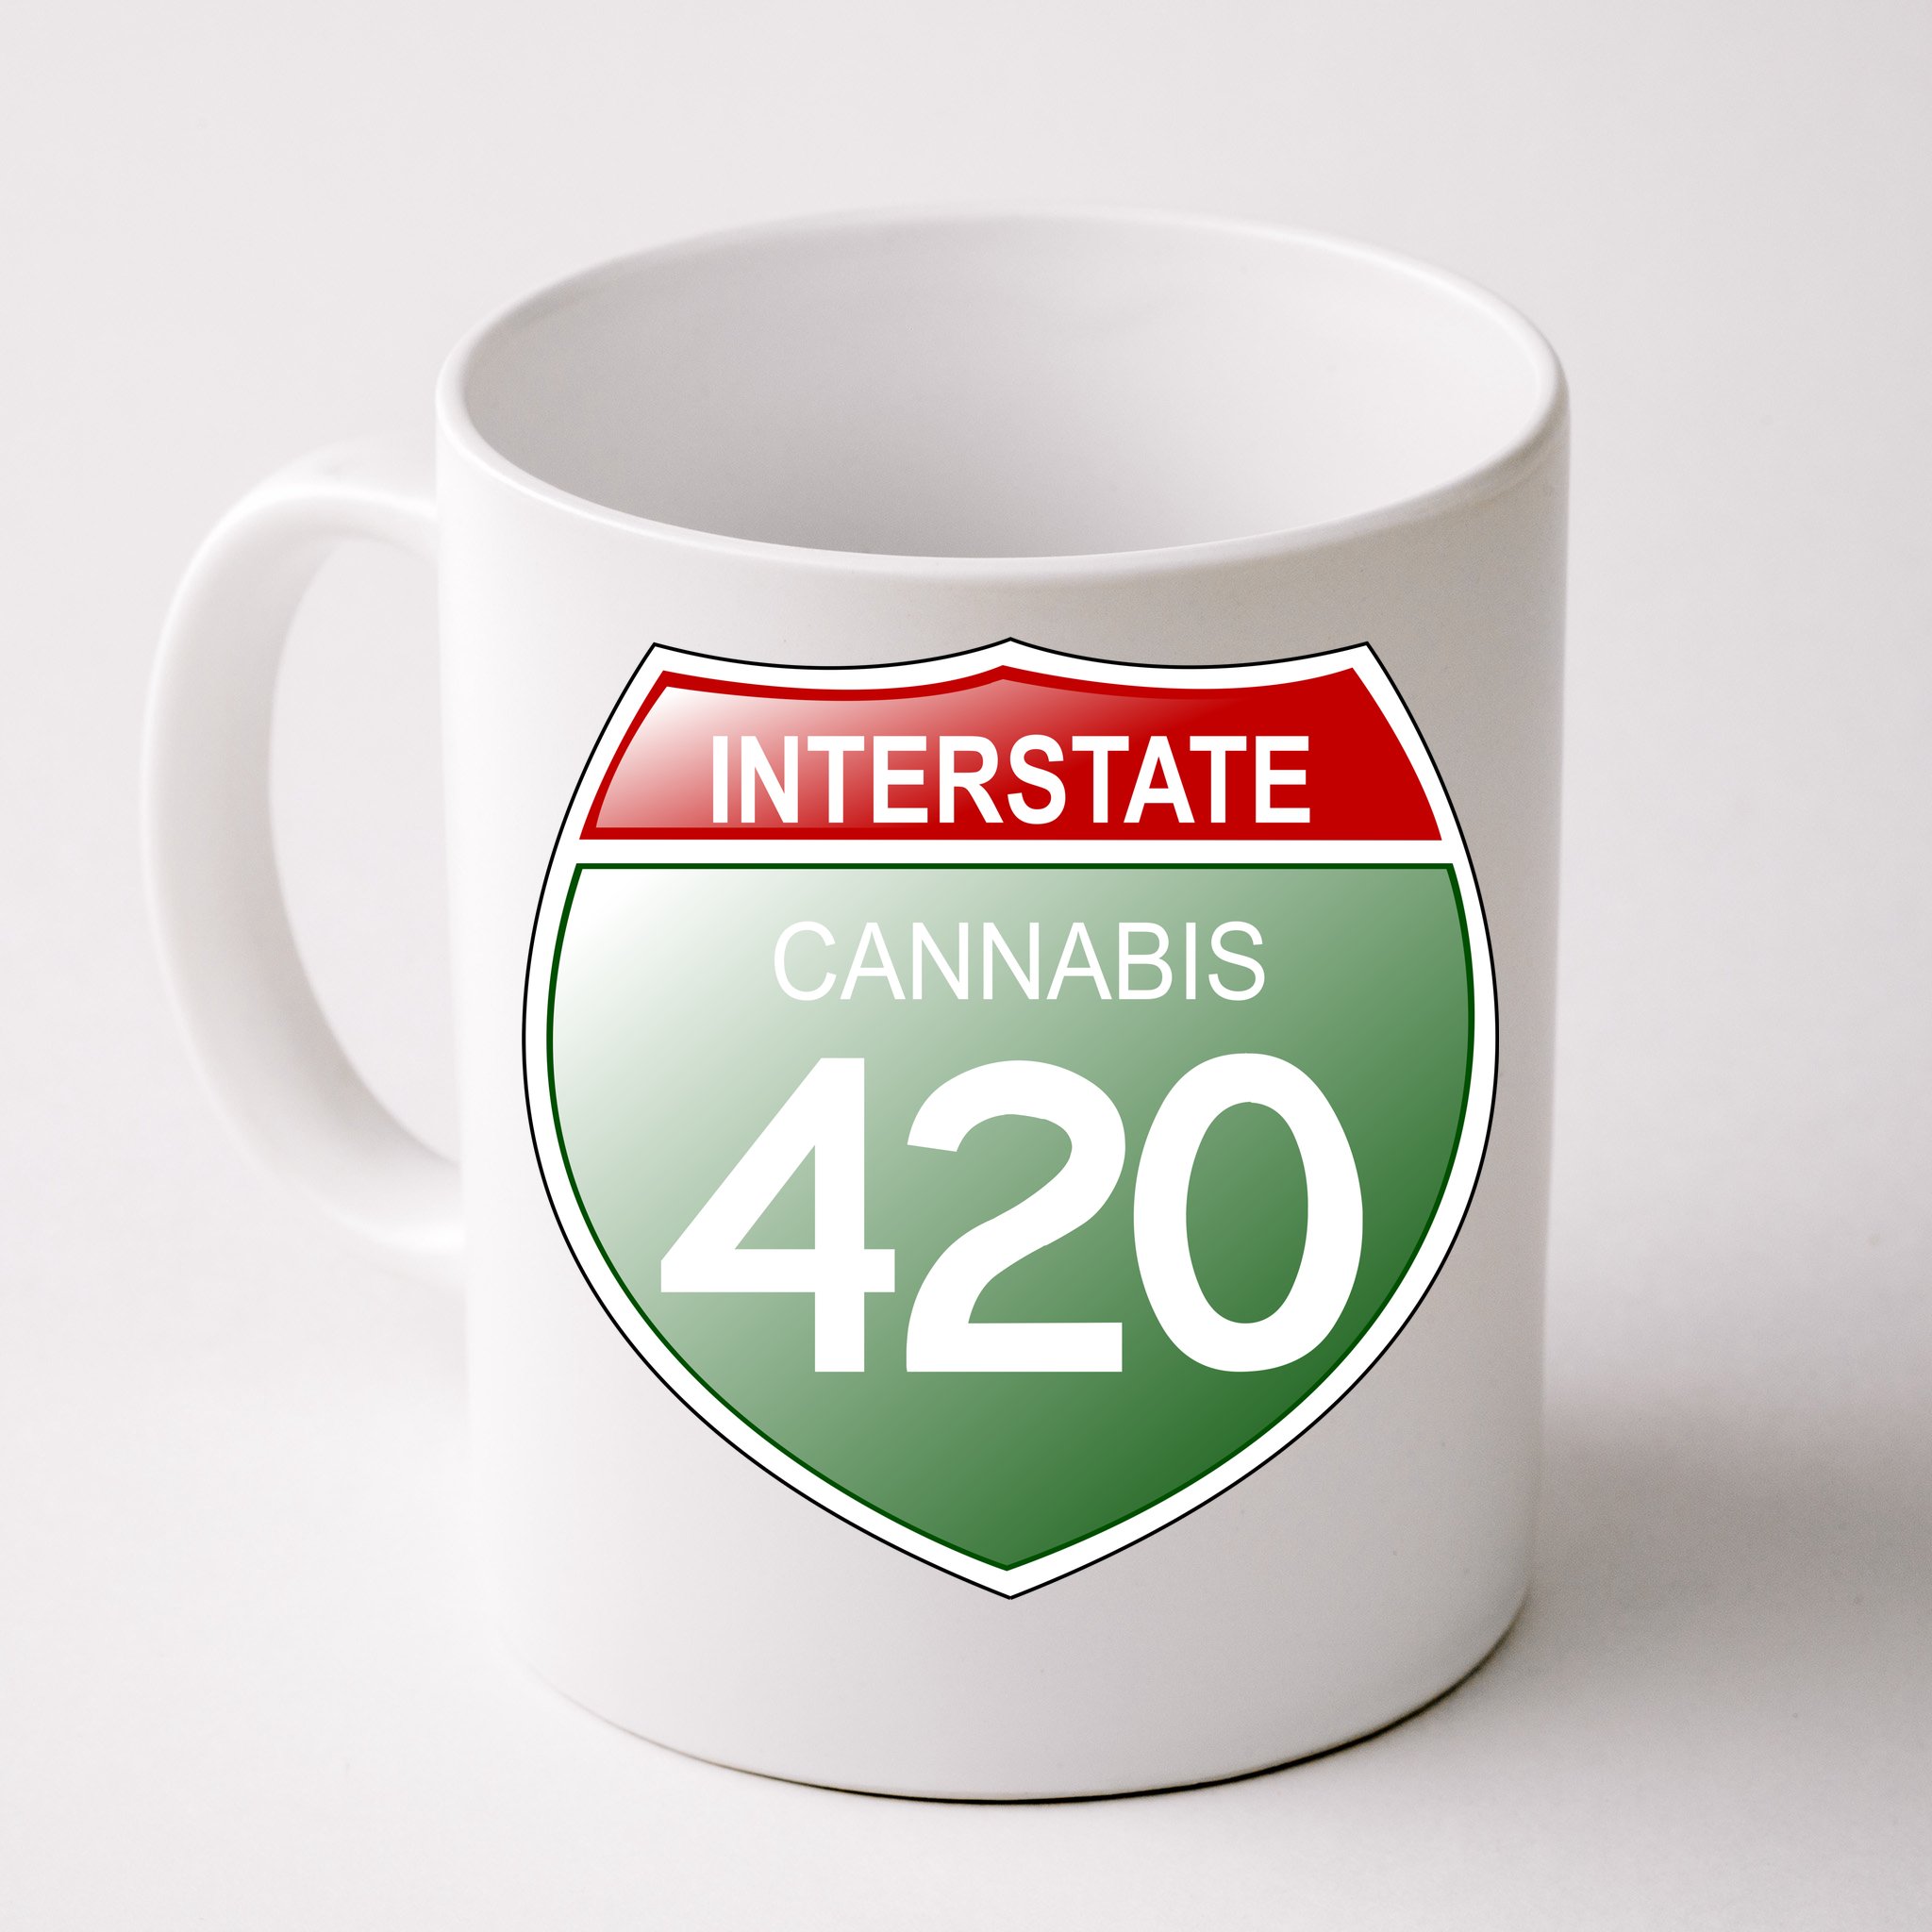 Pot Leaf Weed Marijuana Novelty Drug Smoking Humor Porcelain Coffee 11 Oz Mug 